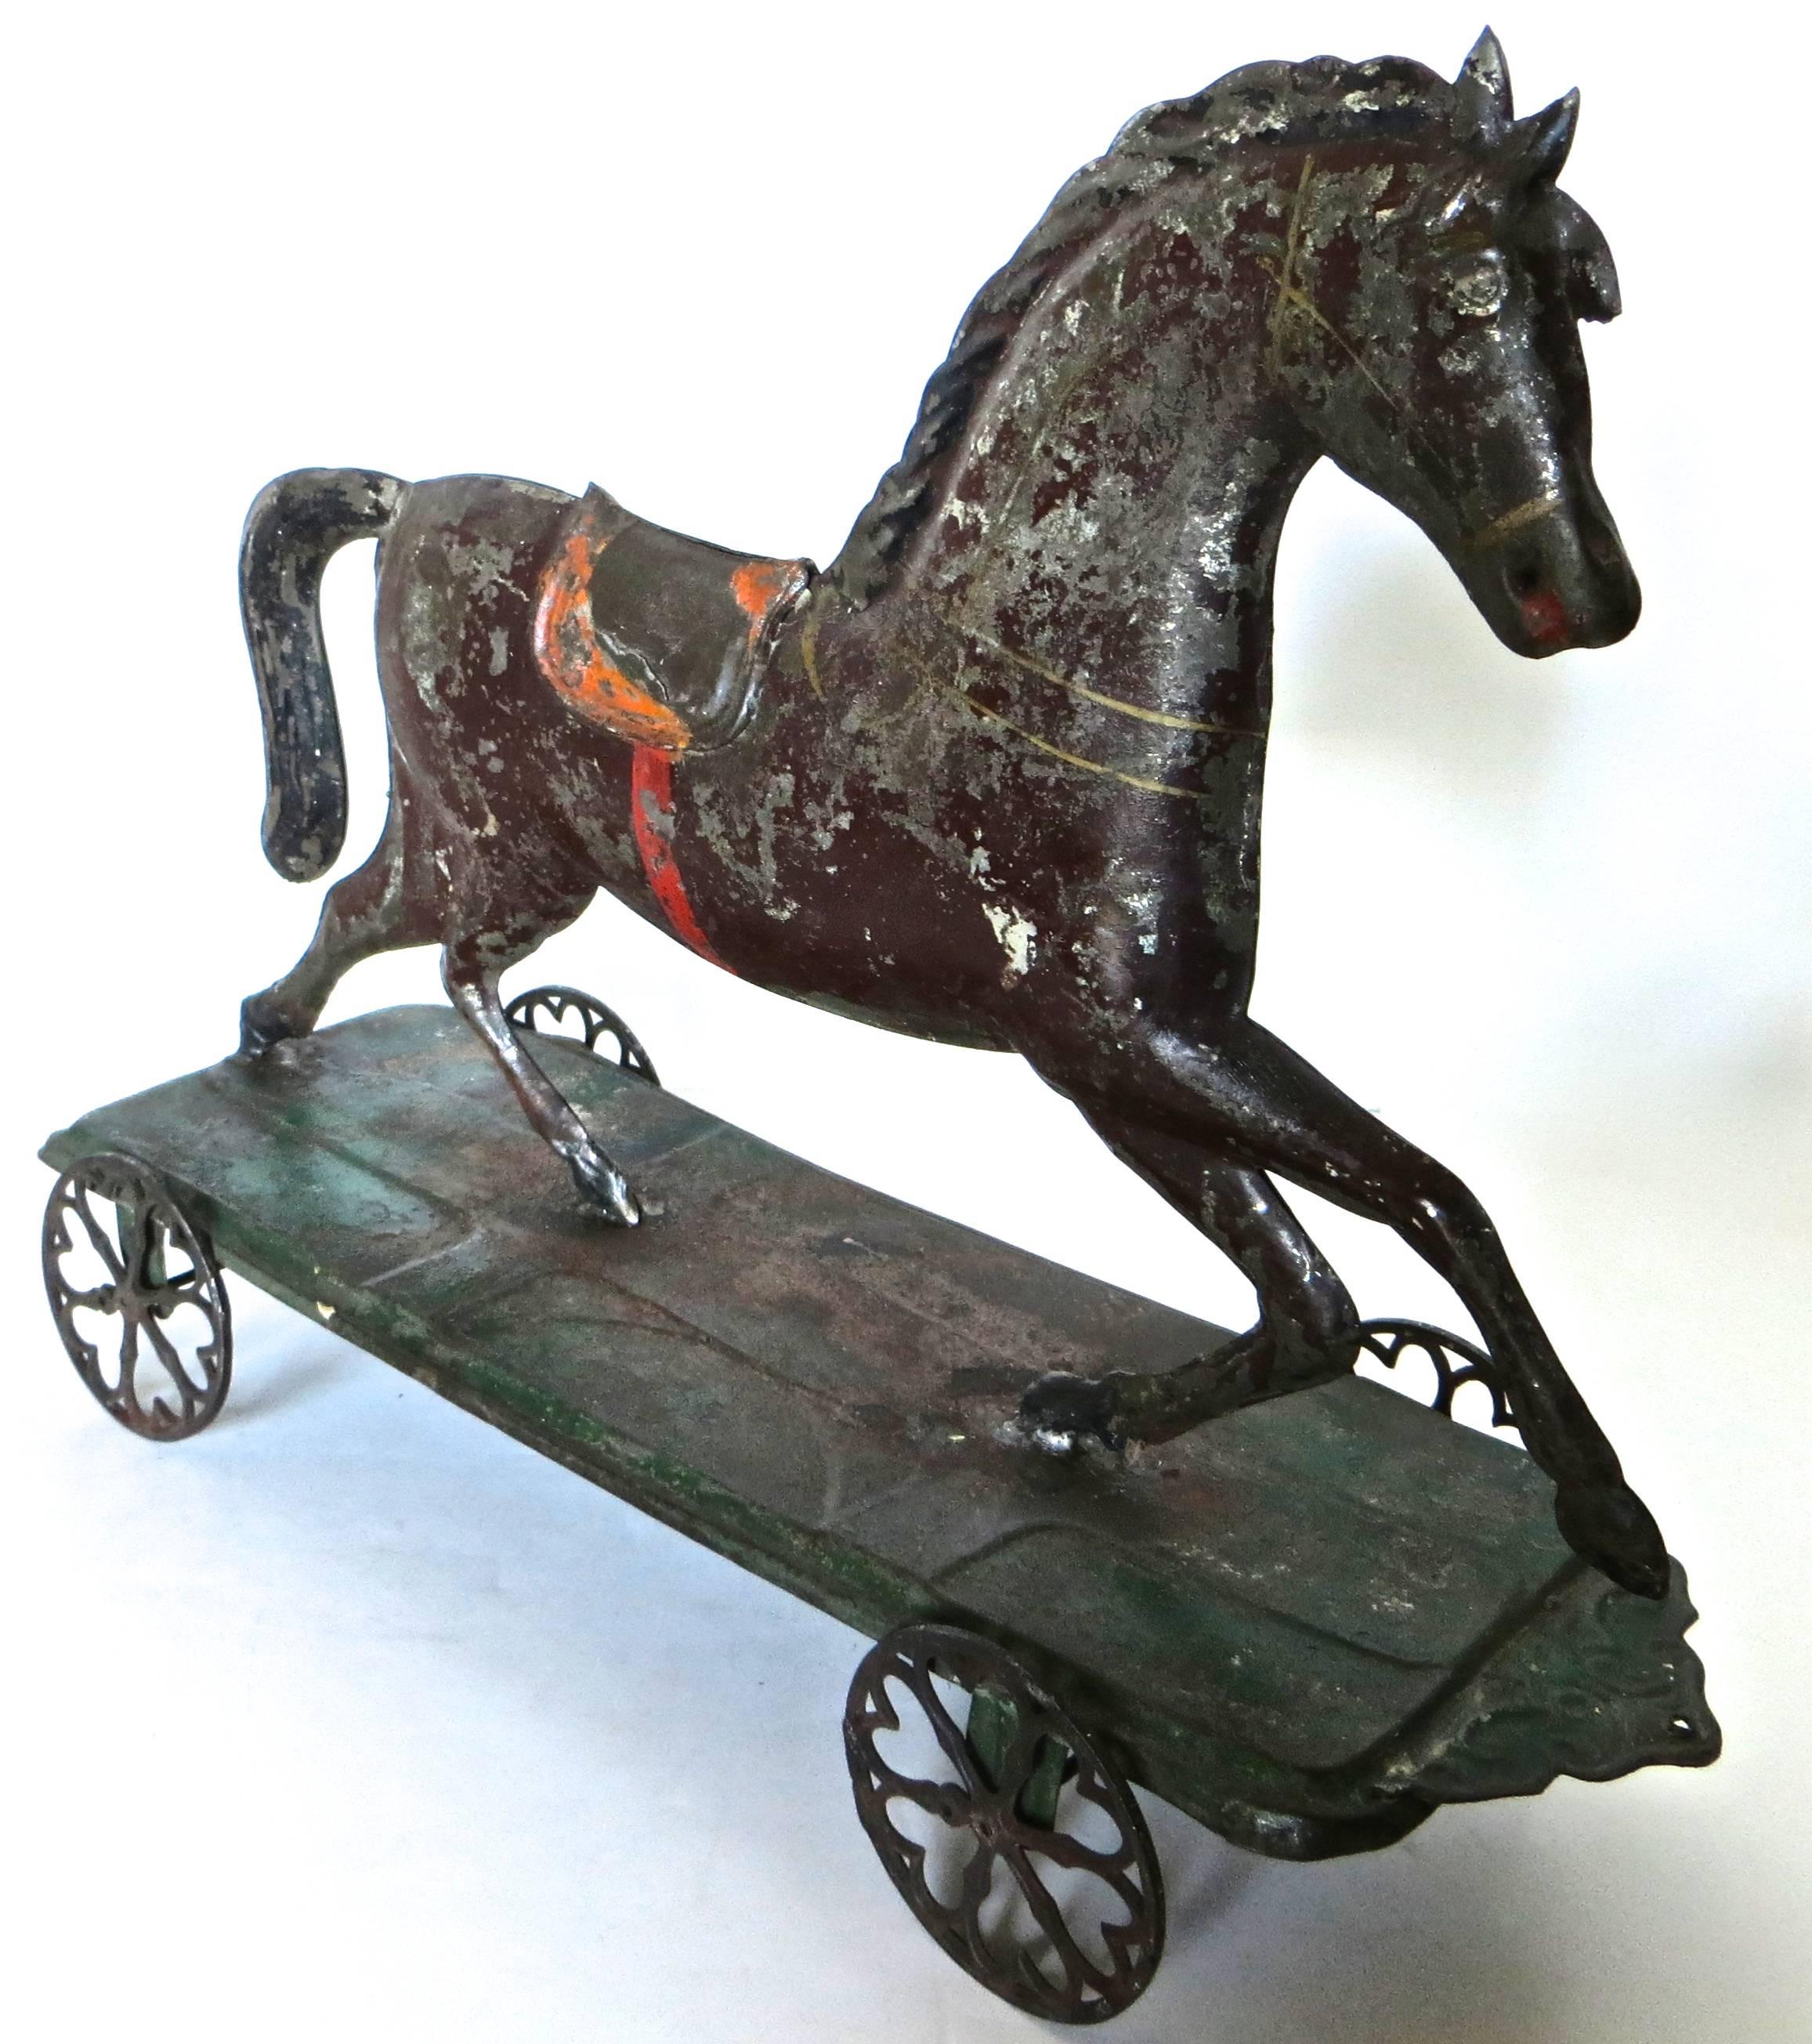 Folk Art American Tin Platform Horse Toy Attributed to Althof, Bergmann & Co., circa 1874